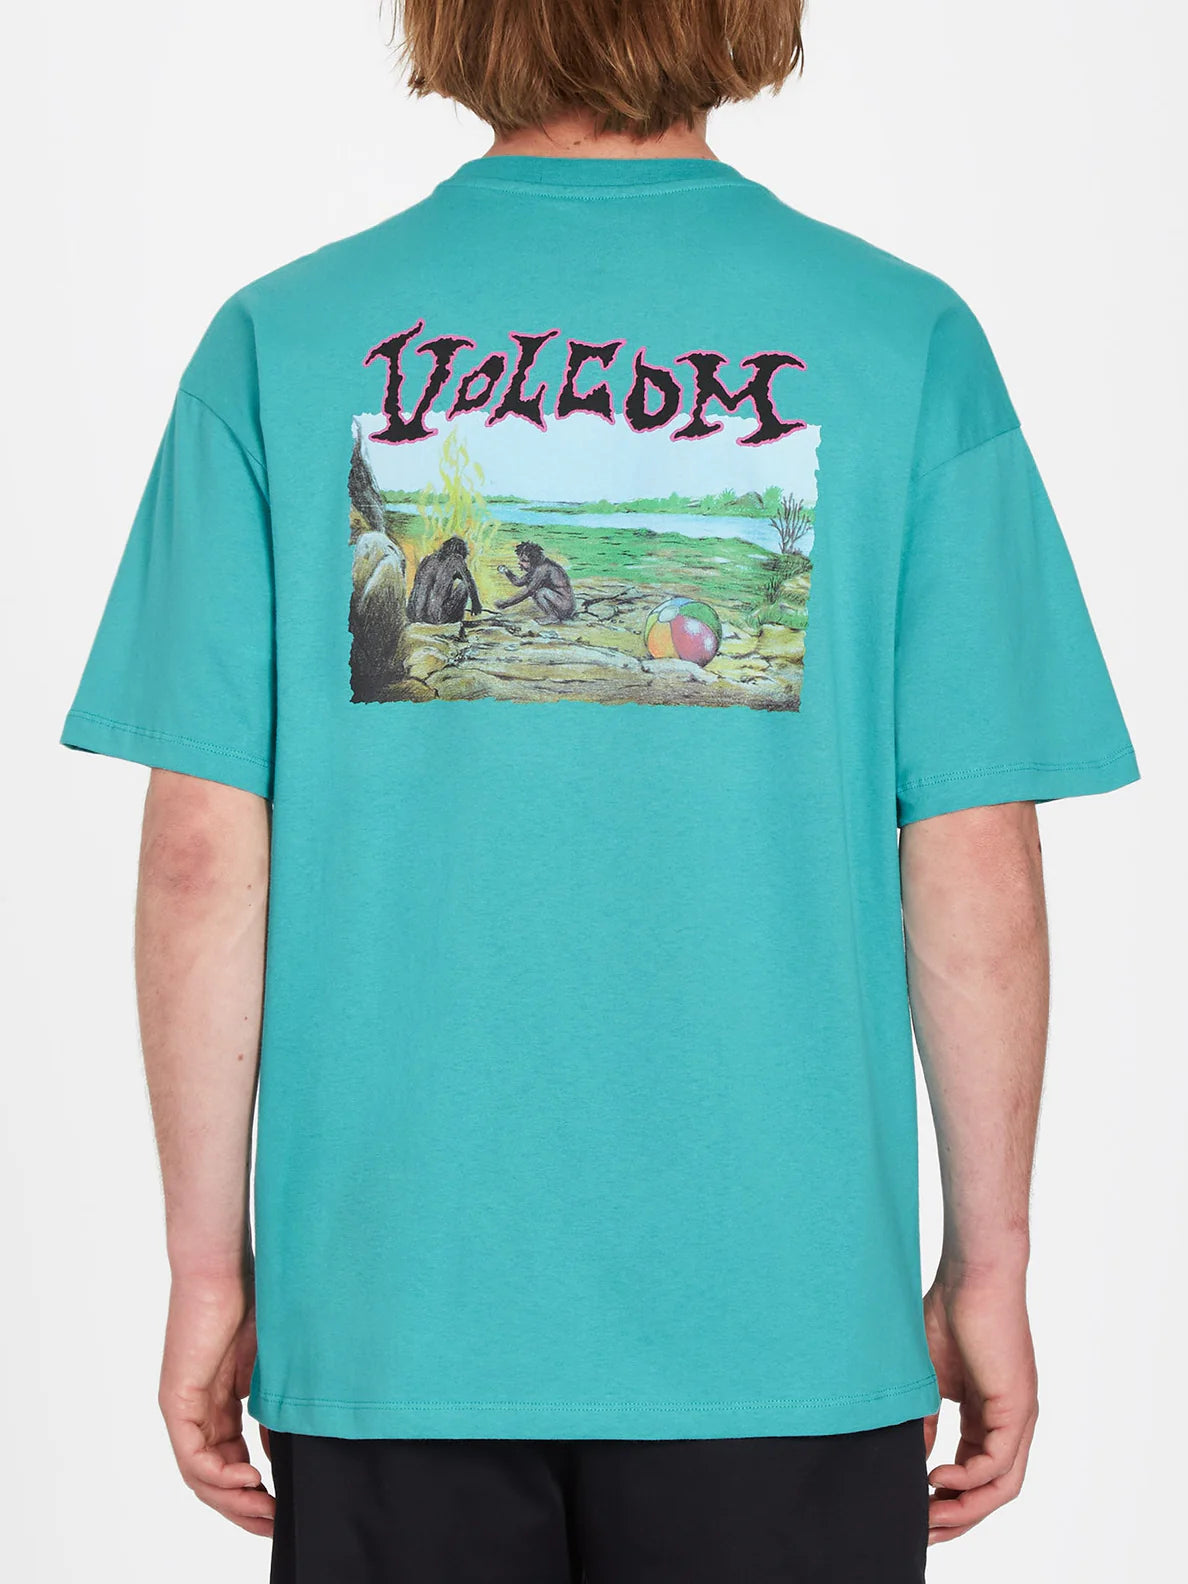 Volcom Crossworld T-Shirt – Temple Teal